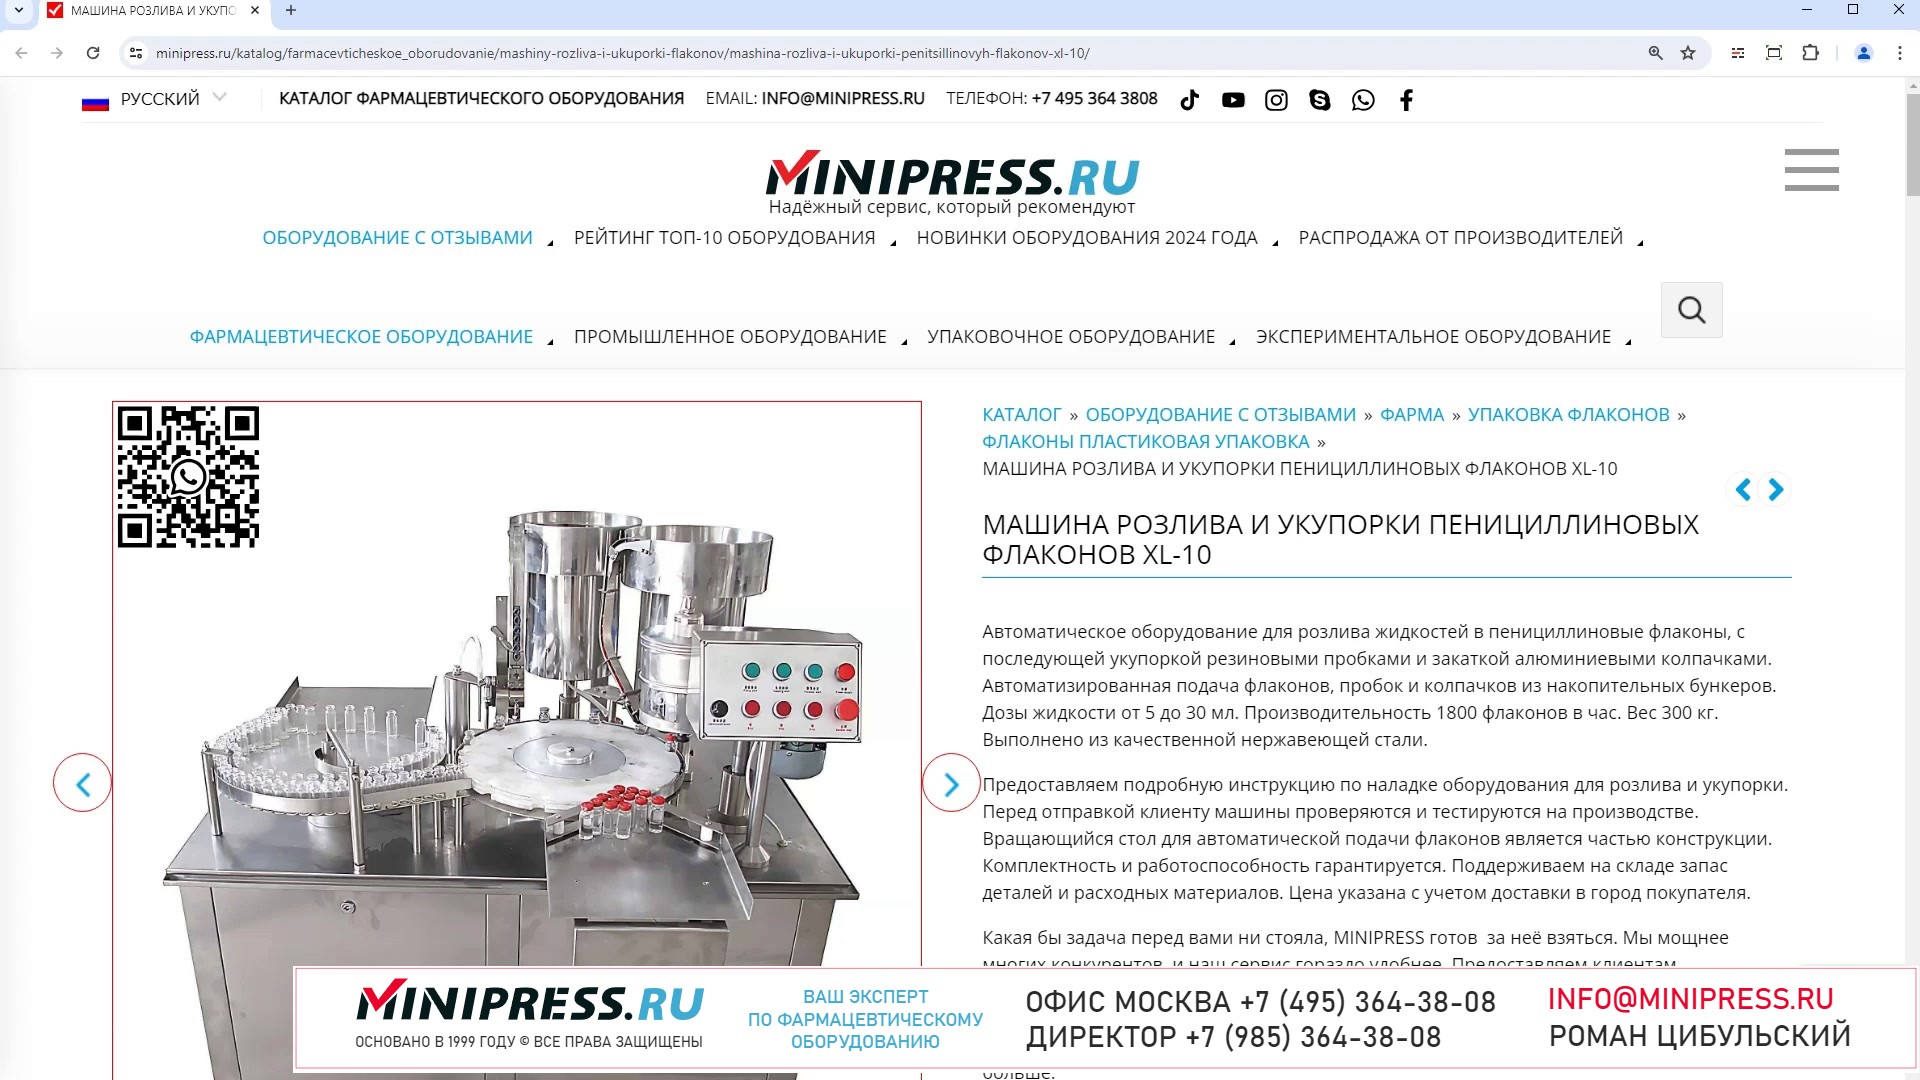 Minipress.ru Машина розлива и укупорки пенициллиновых флаконов XL-10